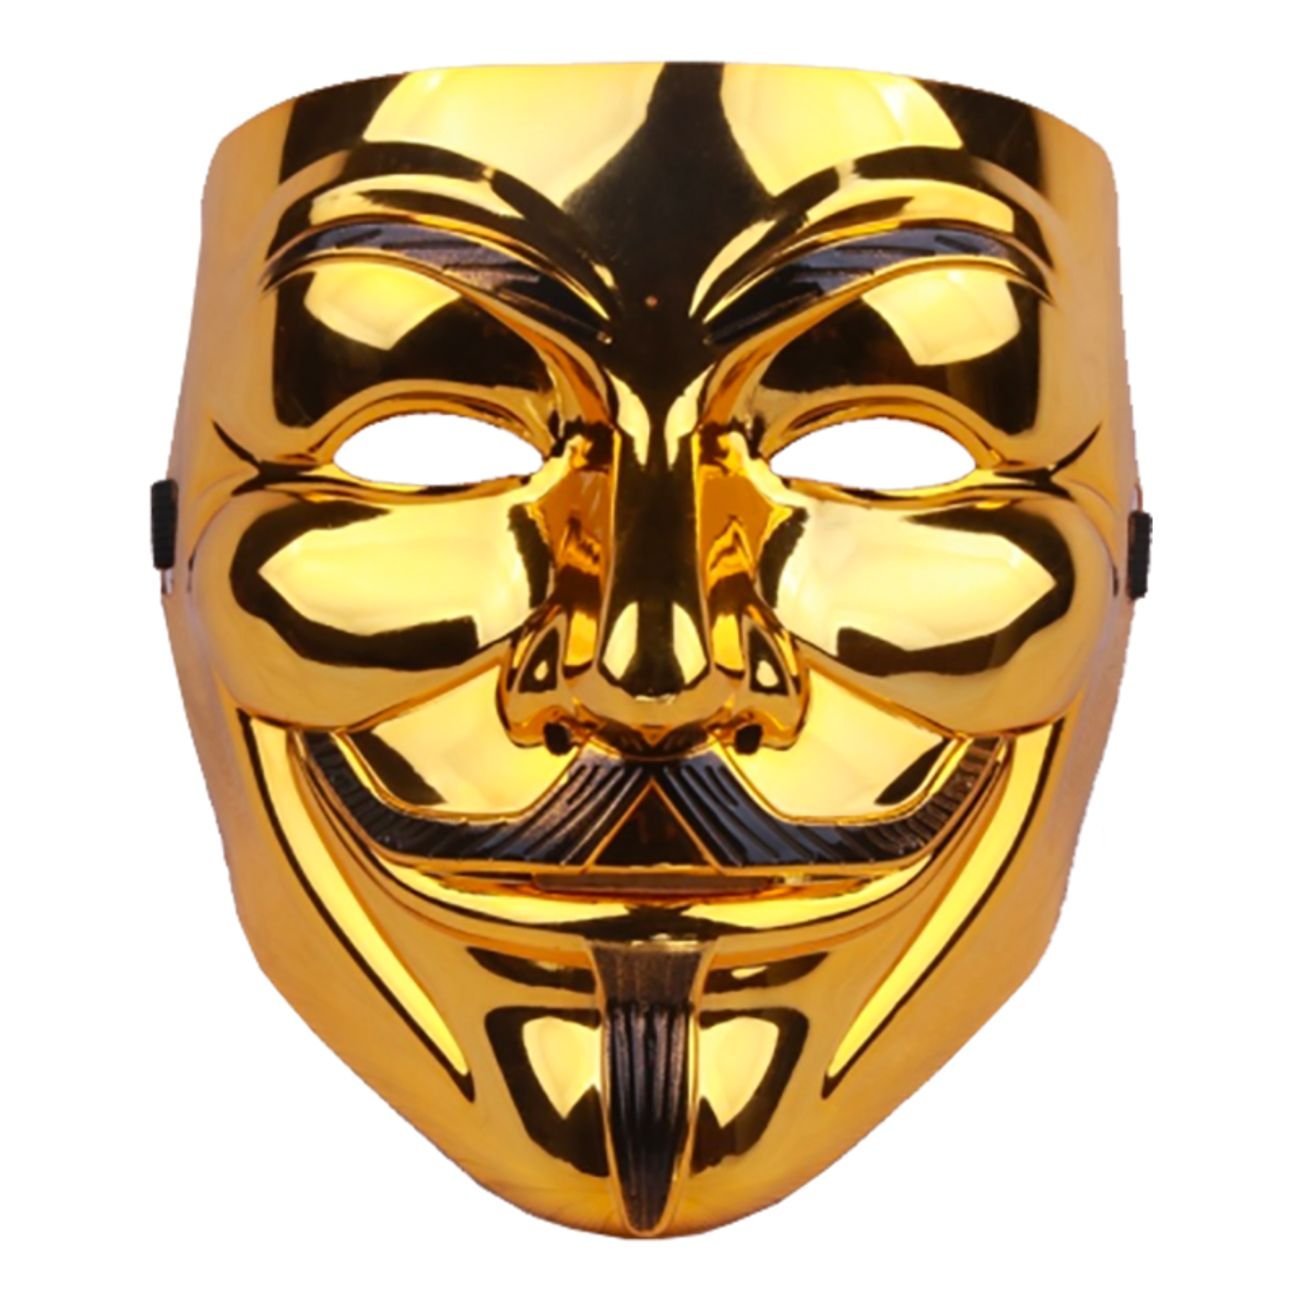 v-for-vendetta-guld-mask-72261-3